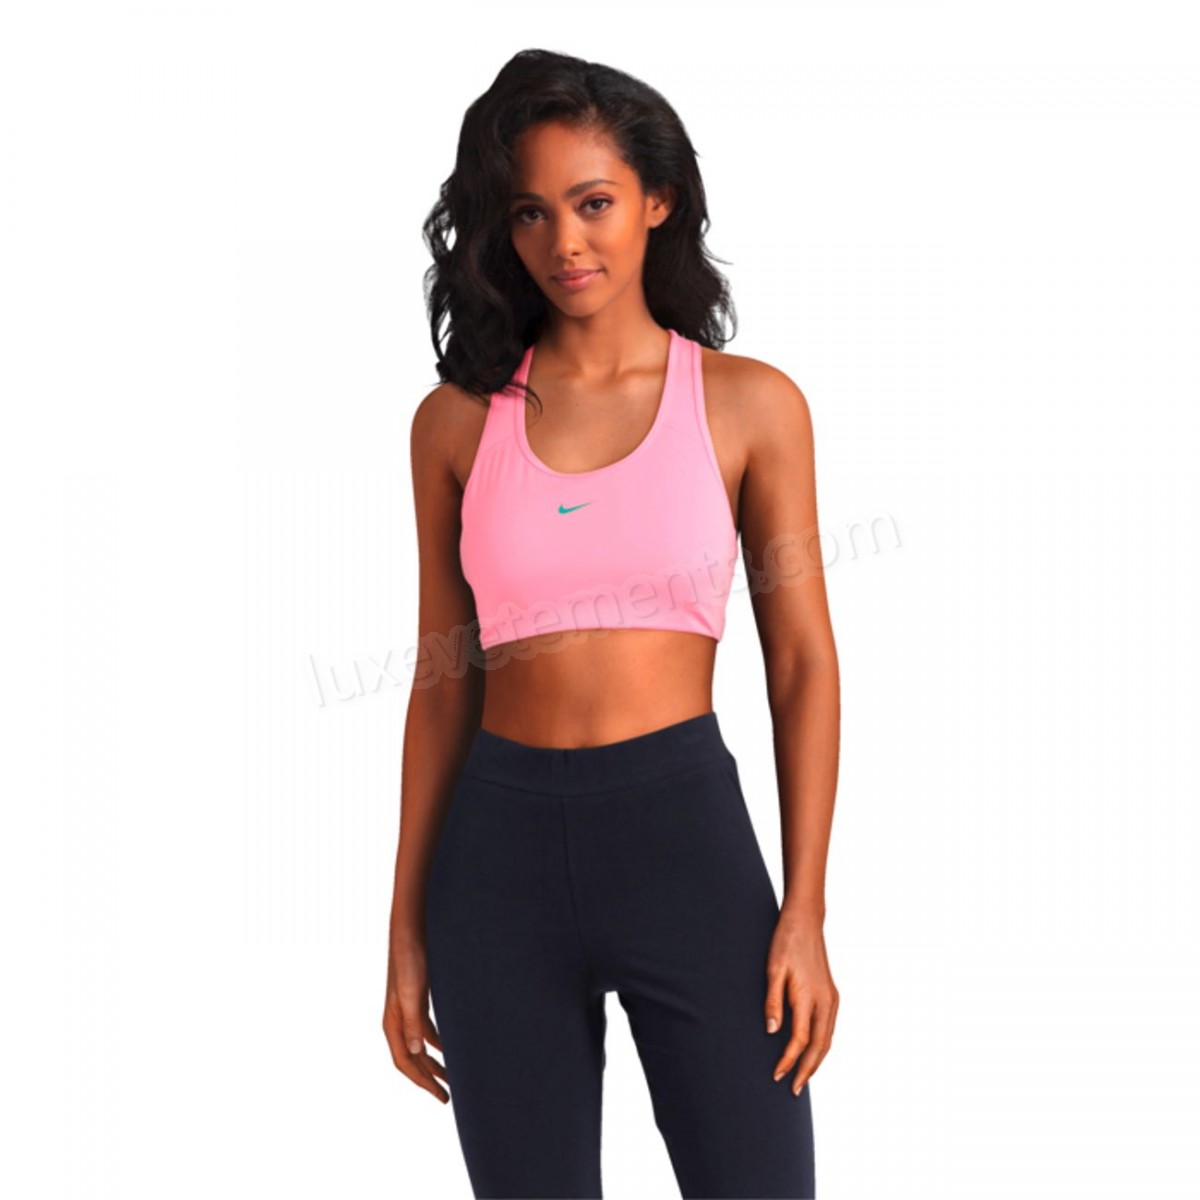 Nike-DEBARDEUR Fitness femme NIKE SWOOSH PAD Vente en ligne - -4